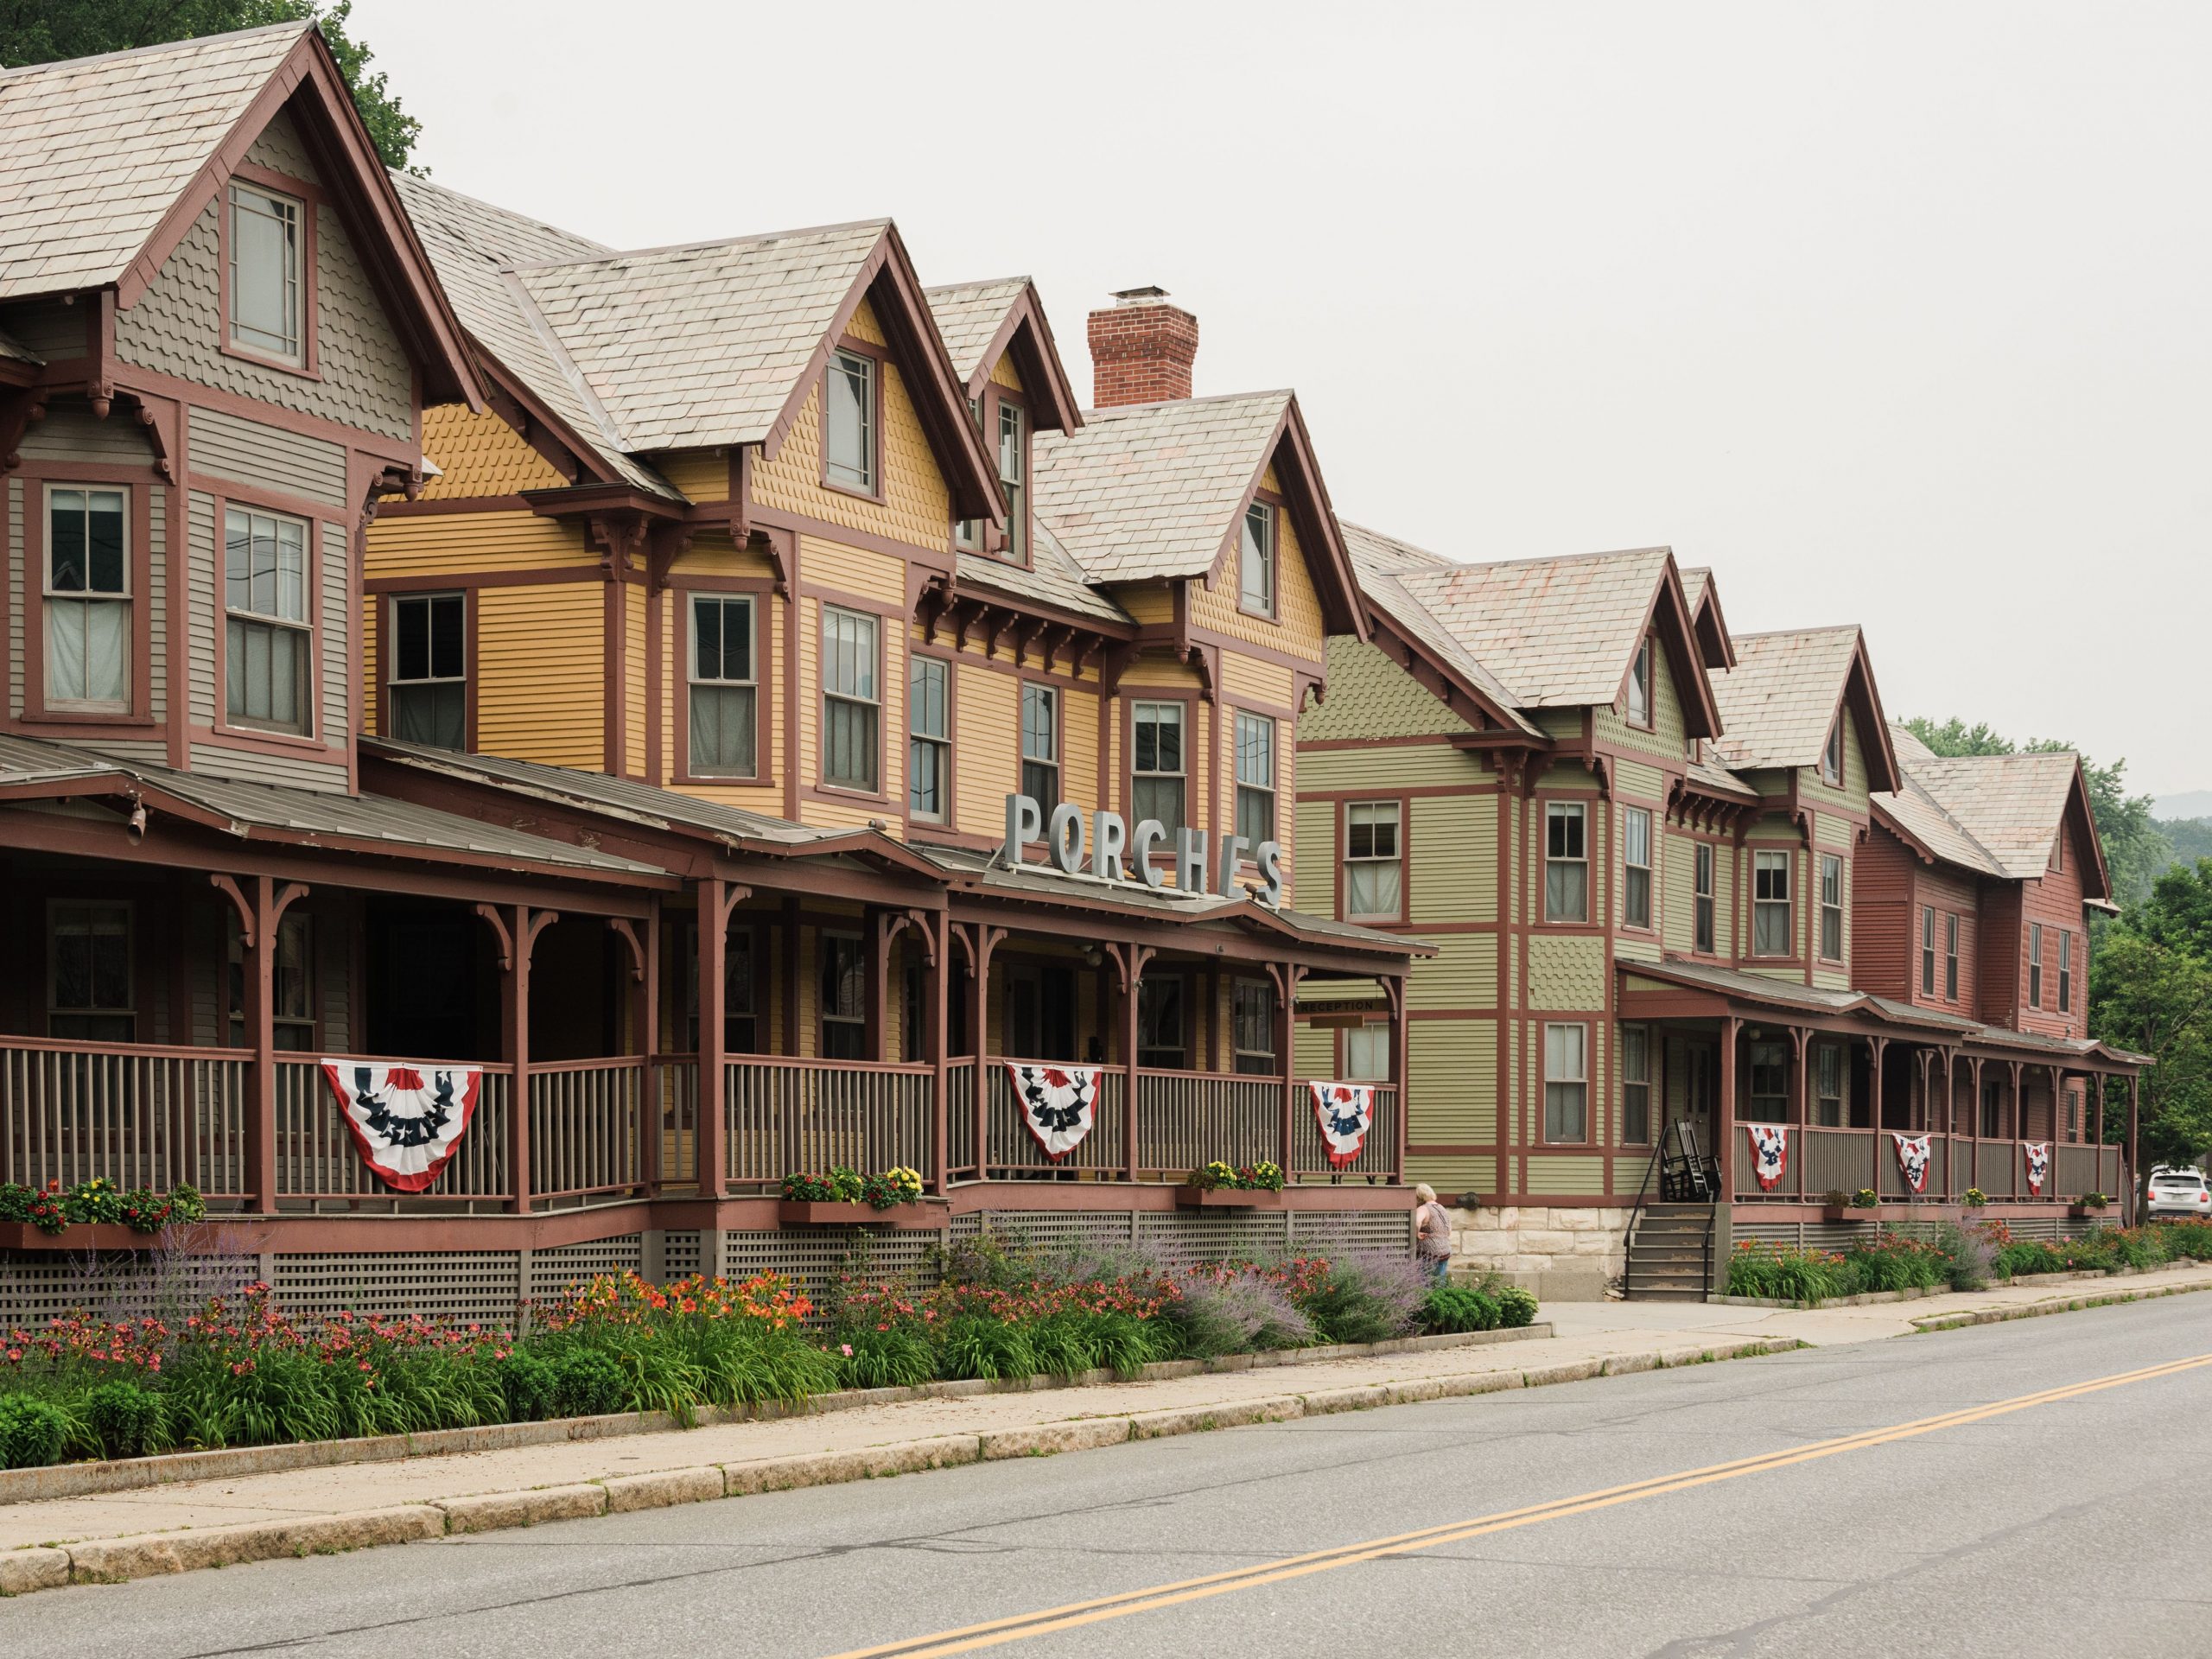 The Porches Inn at MASS MoCA, in North Adams, Massachusetts